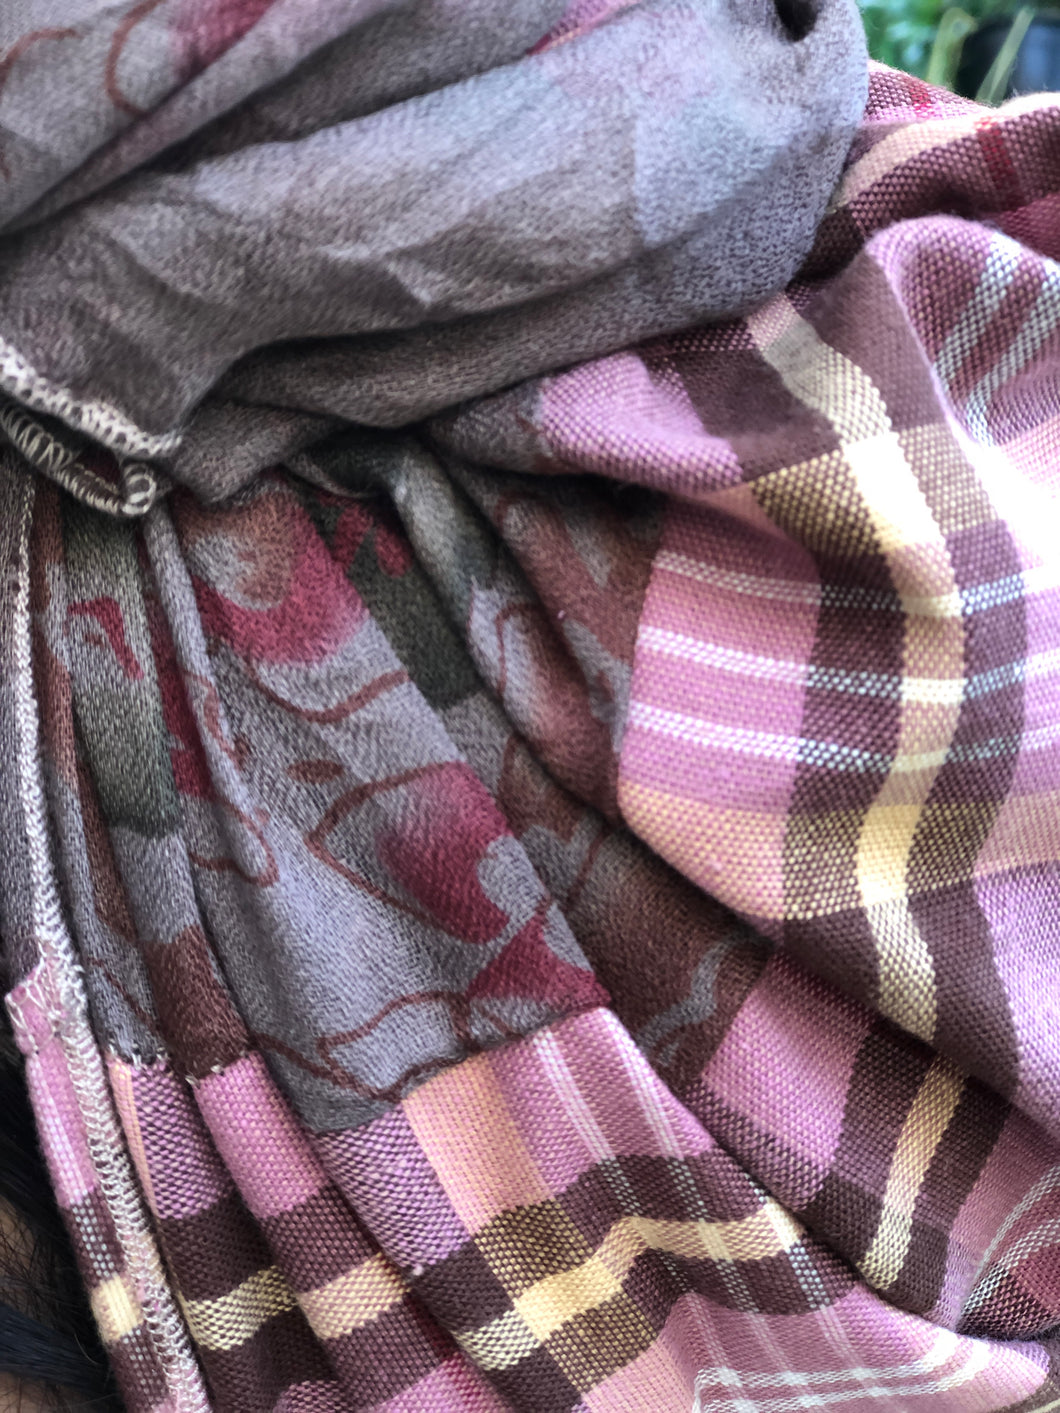 Twin Fabric Pink Checked/Brown Floral Scarf - מטפחות - כיסוי ראש - Aviva Lush tichels, head scarves, volumizers